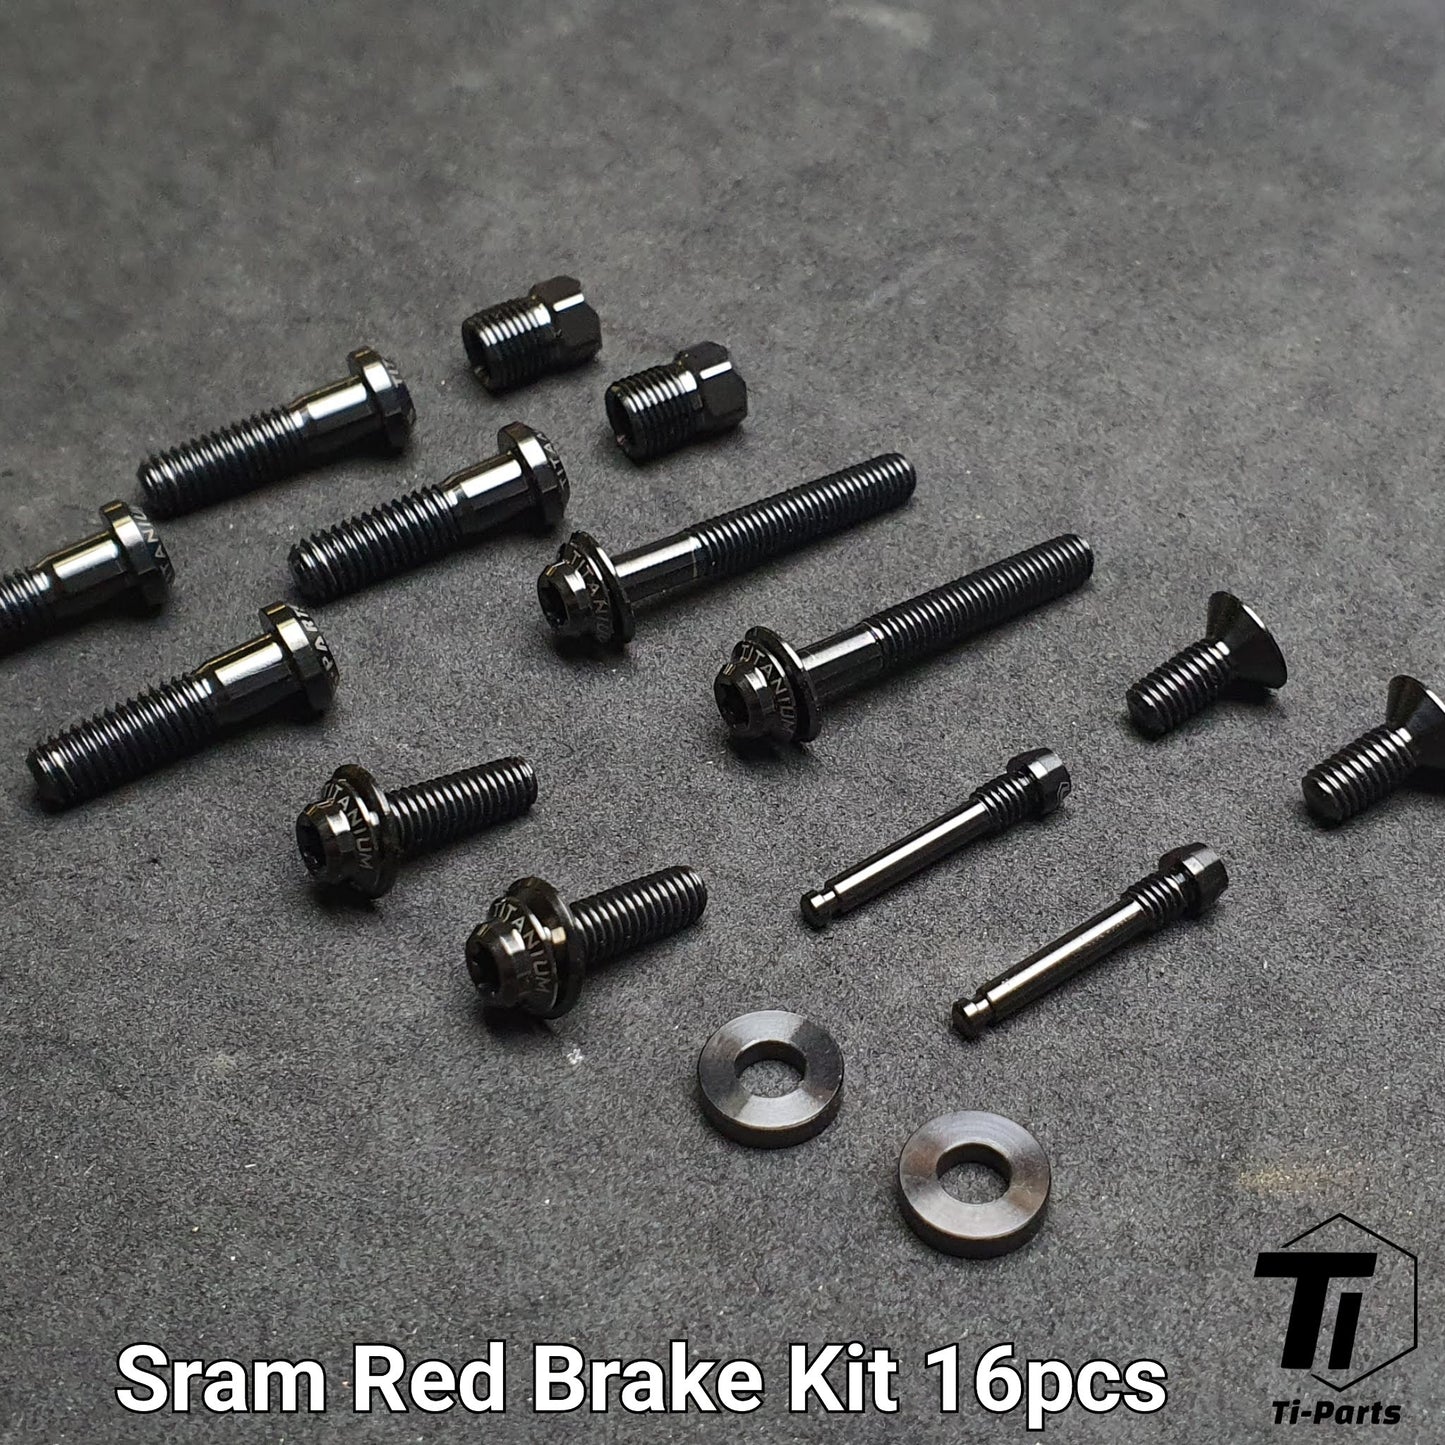 Titanium Sram Red Force Rival eTap AXS Full Upgrade Kit | Πλήρης αναβάθμιση Ti | Βαθμός 5 Τιτάνιο Σιγκαπούρη